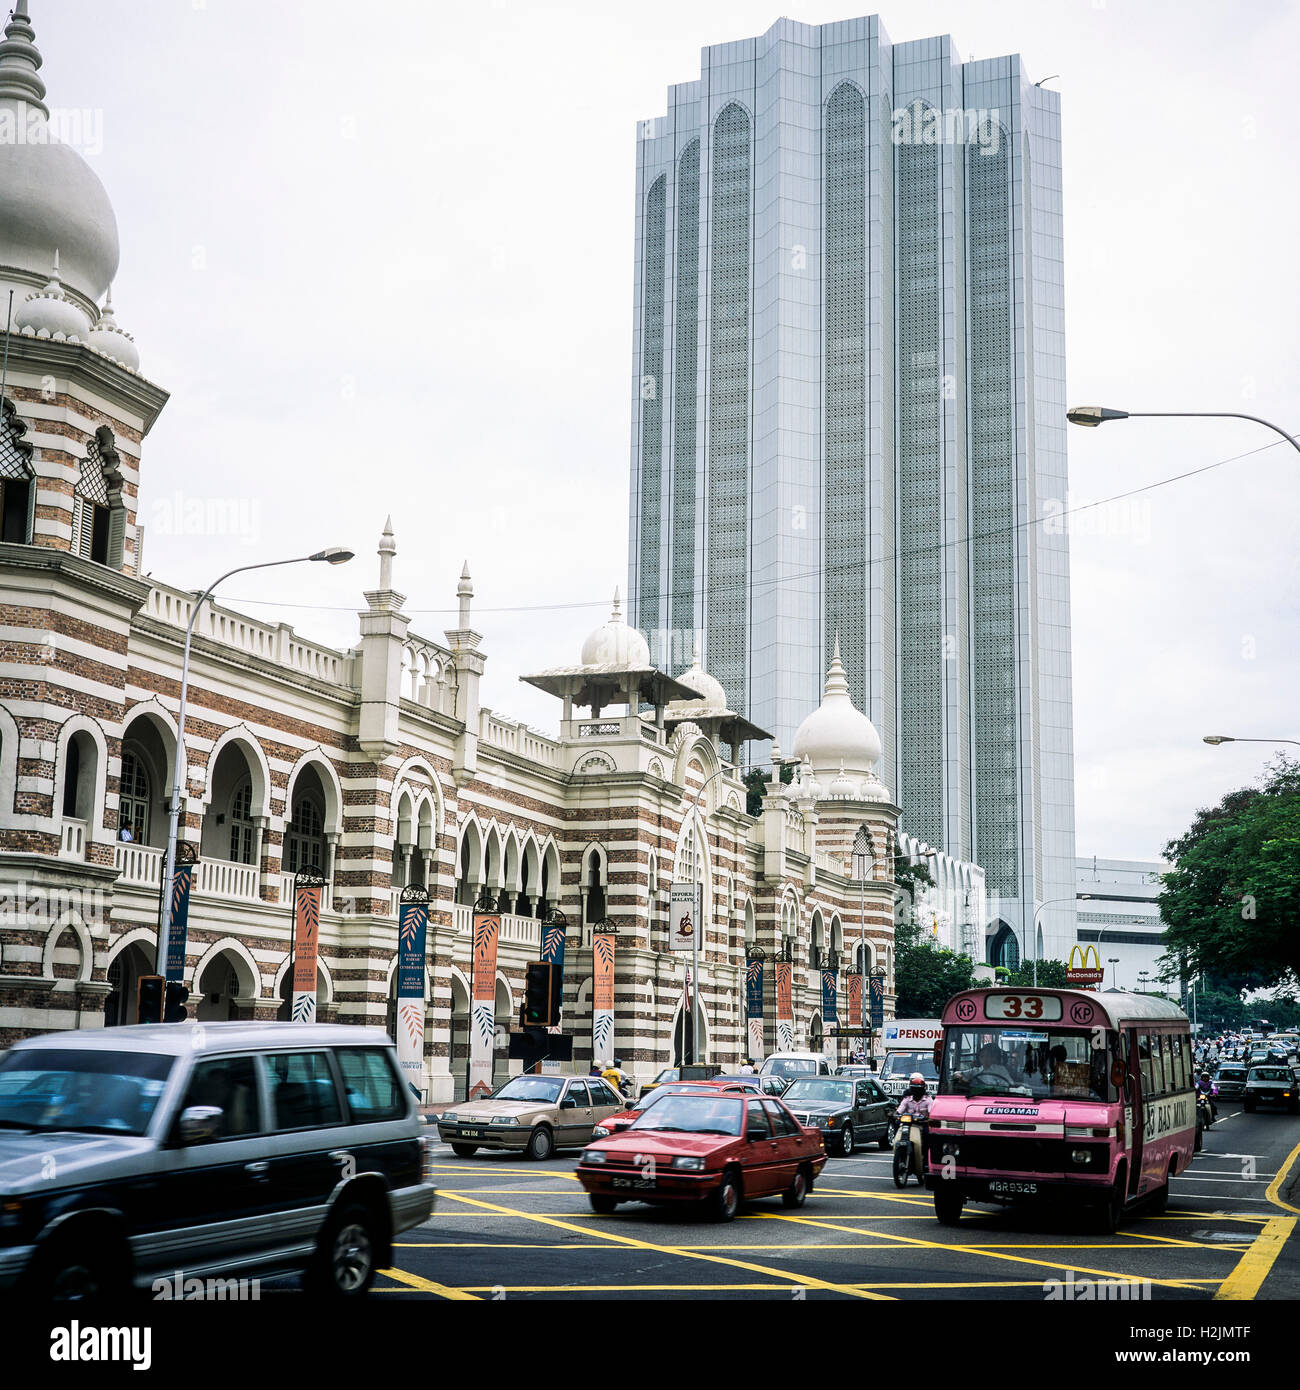 Jalan Sultan Hishamuddin building and Dayabumi Complex skyscraper, Dataran Merdeka square, Kuala Lumpur, Malaysia Stock Photo